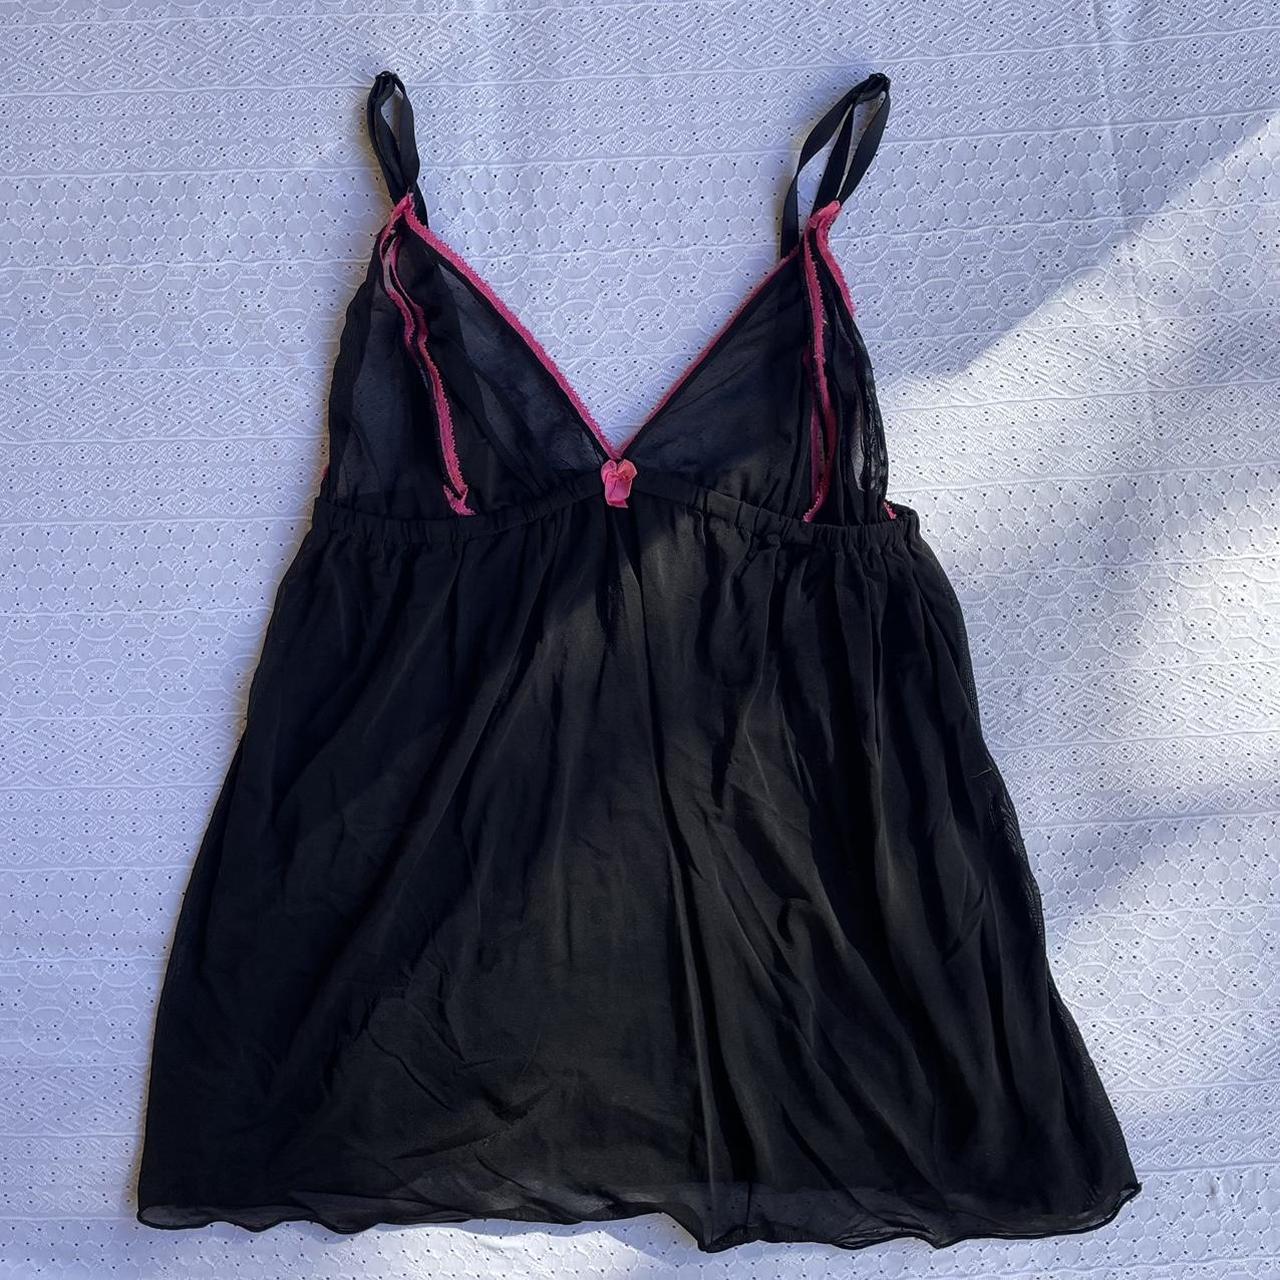 Y2K one size lingerie black with pink detail top - Depop